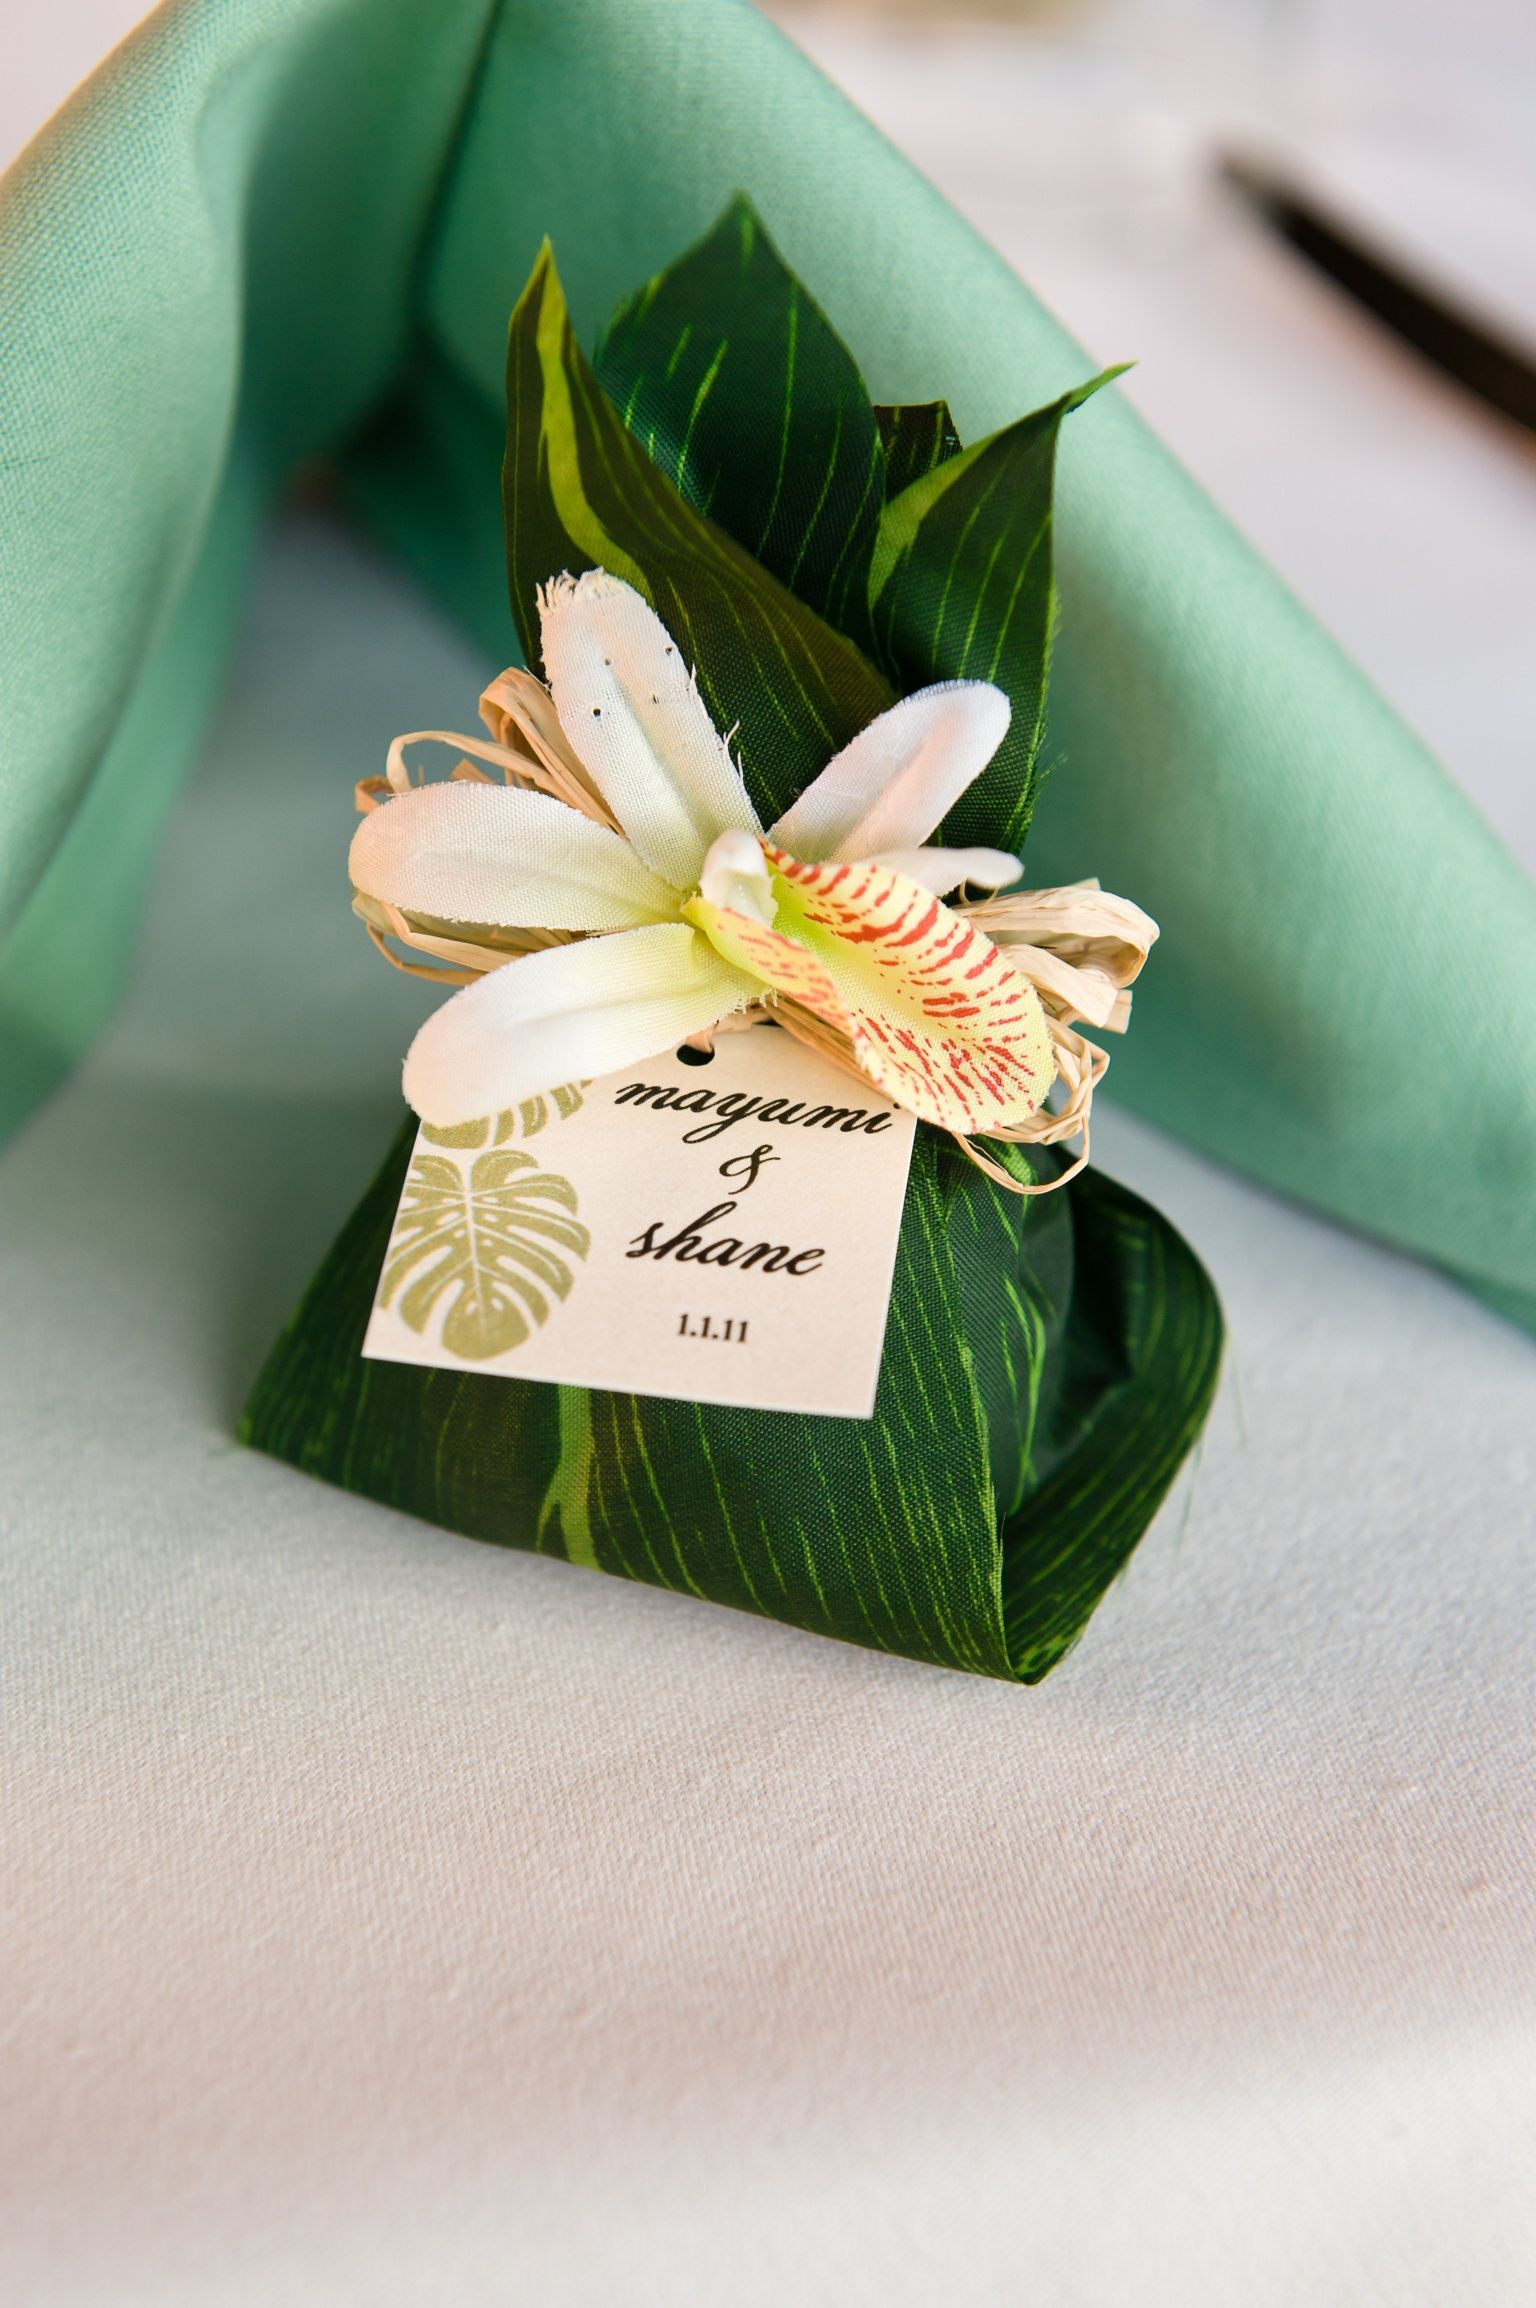 The 20 Best Ideas for Hawaiian Wedding Gift Ideas Home, Family, Style